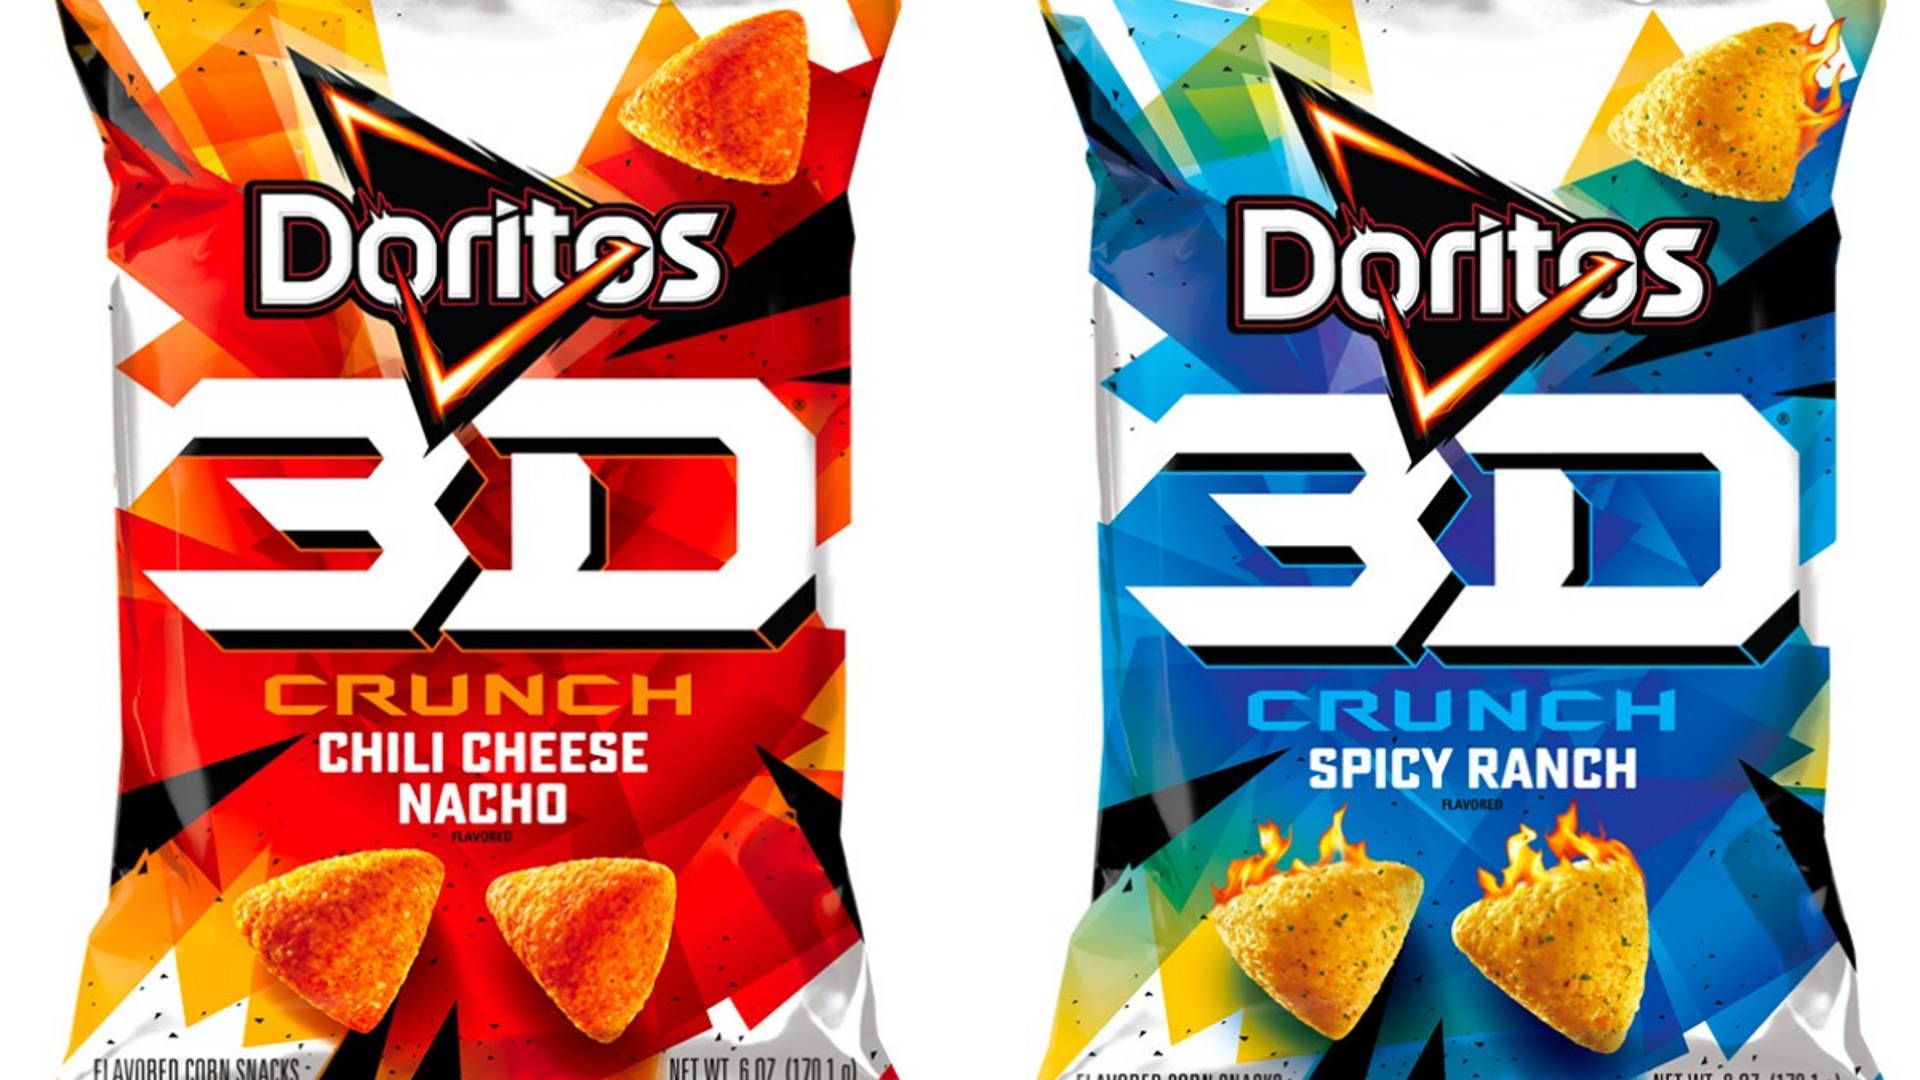 A bag of doritos 3d chips - Doritos